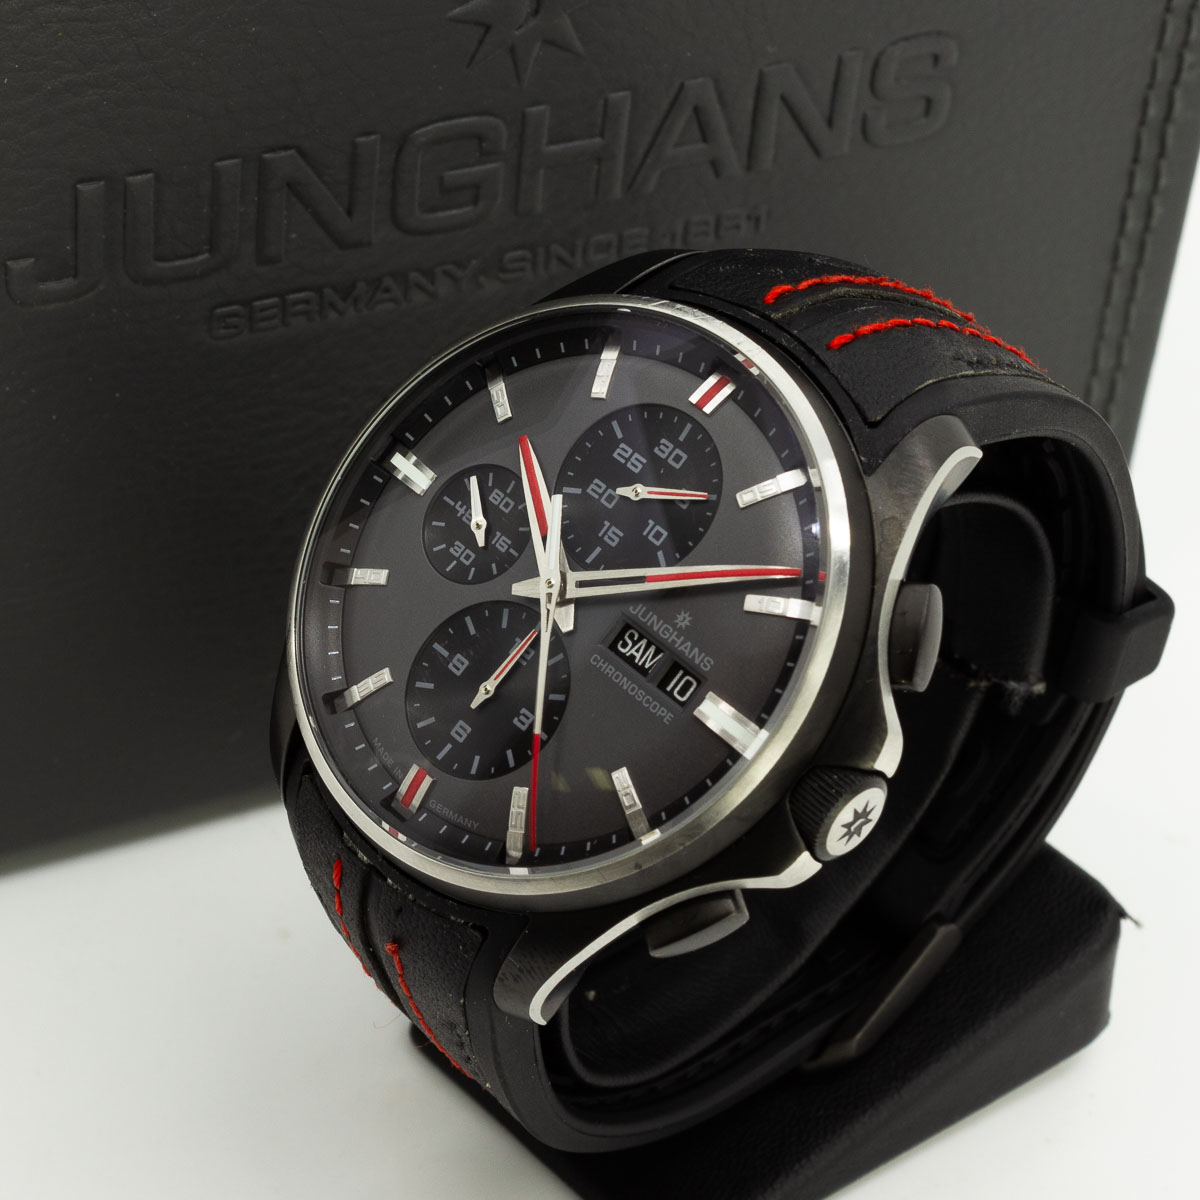 1 Armbanduhr Junghans Meister Automatic Chronoscop PVD, limitiert, Ref.027/4025.00  mit Kautschukband , Originalpapiere und -box